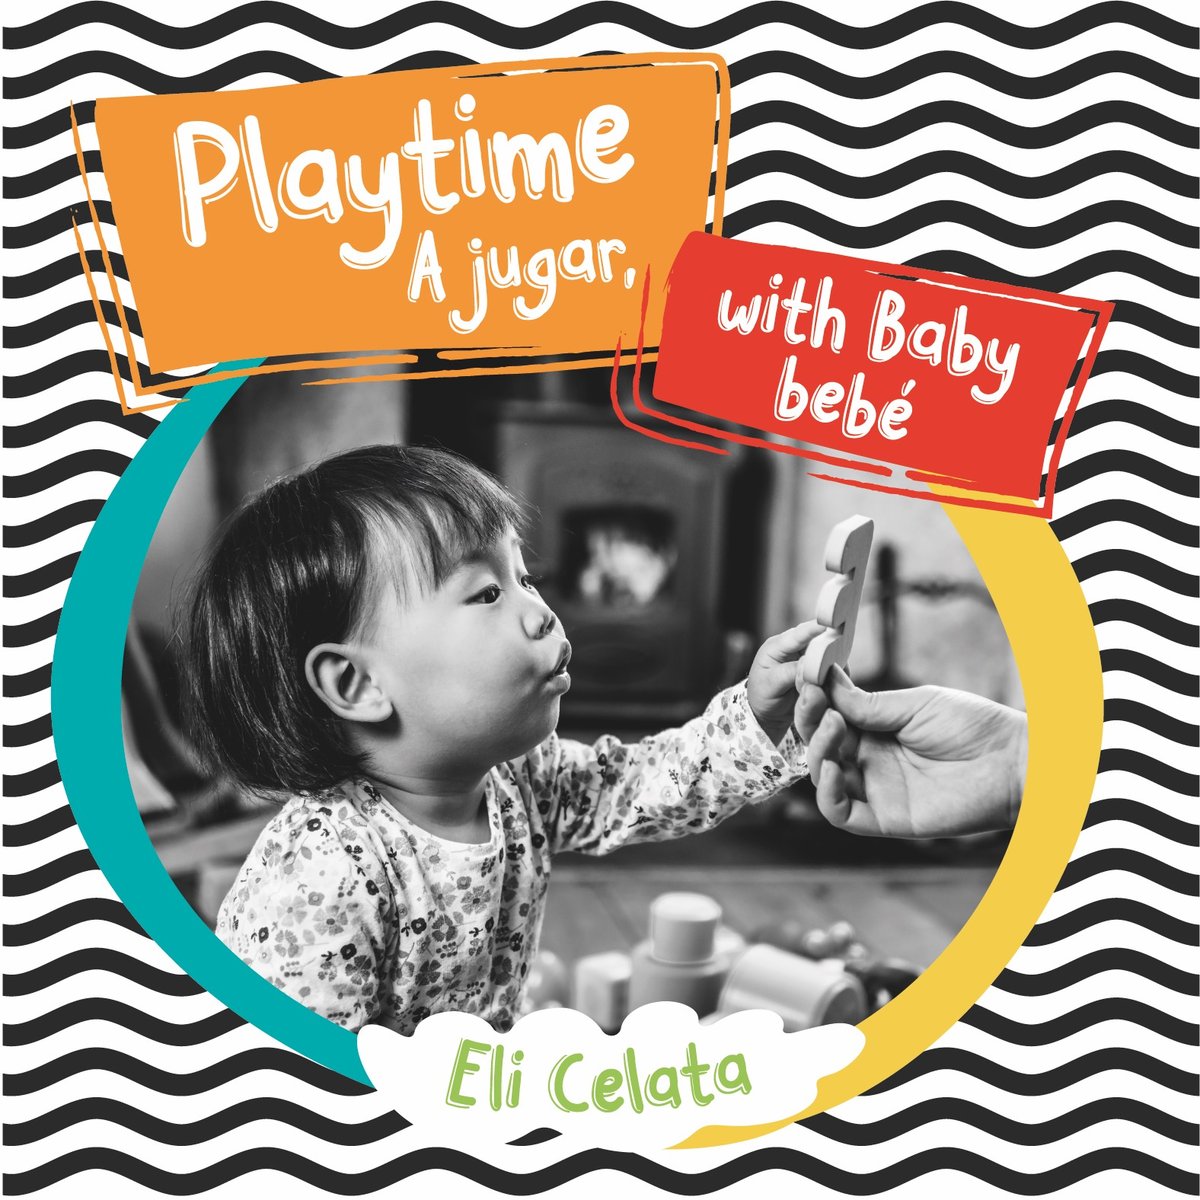 Playtime with Baby / A jugar, bebé